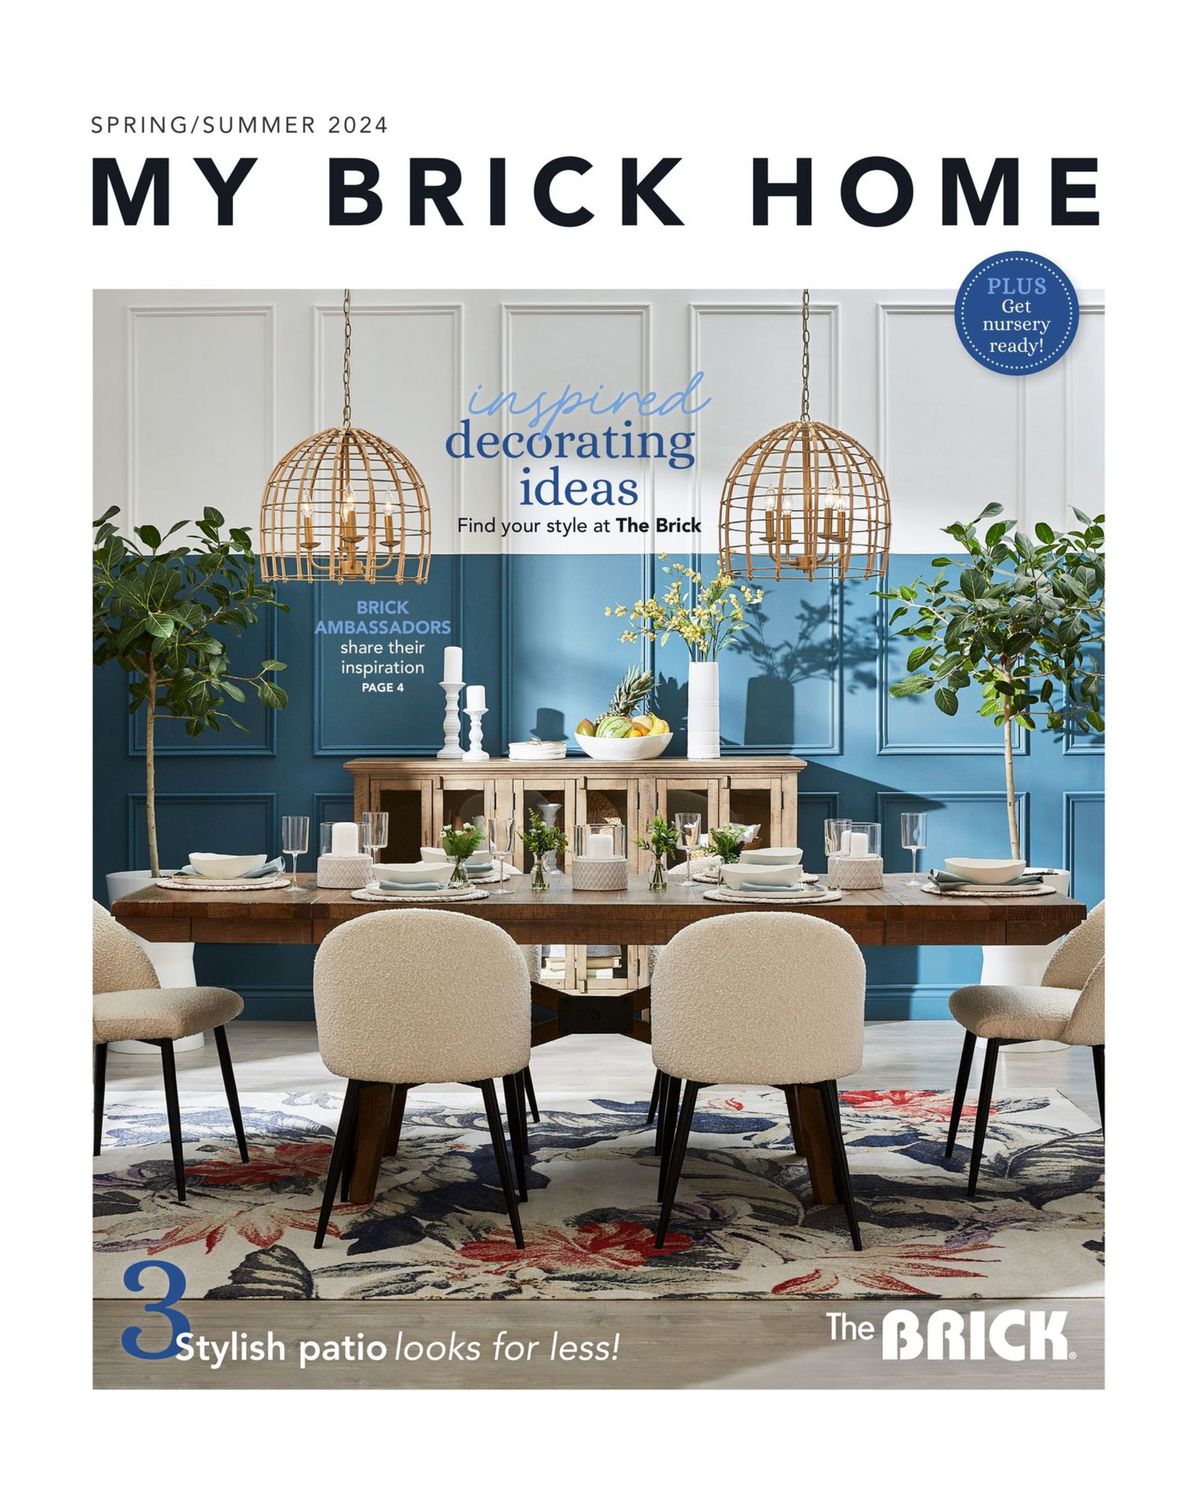 The Brick - My Brick Home Catalog - Spring/Summer 2024 - Page 1